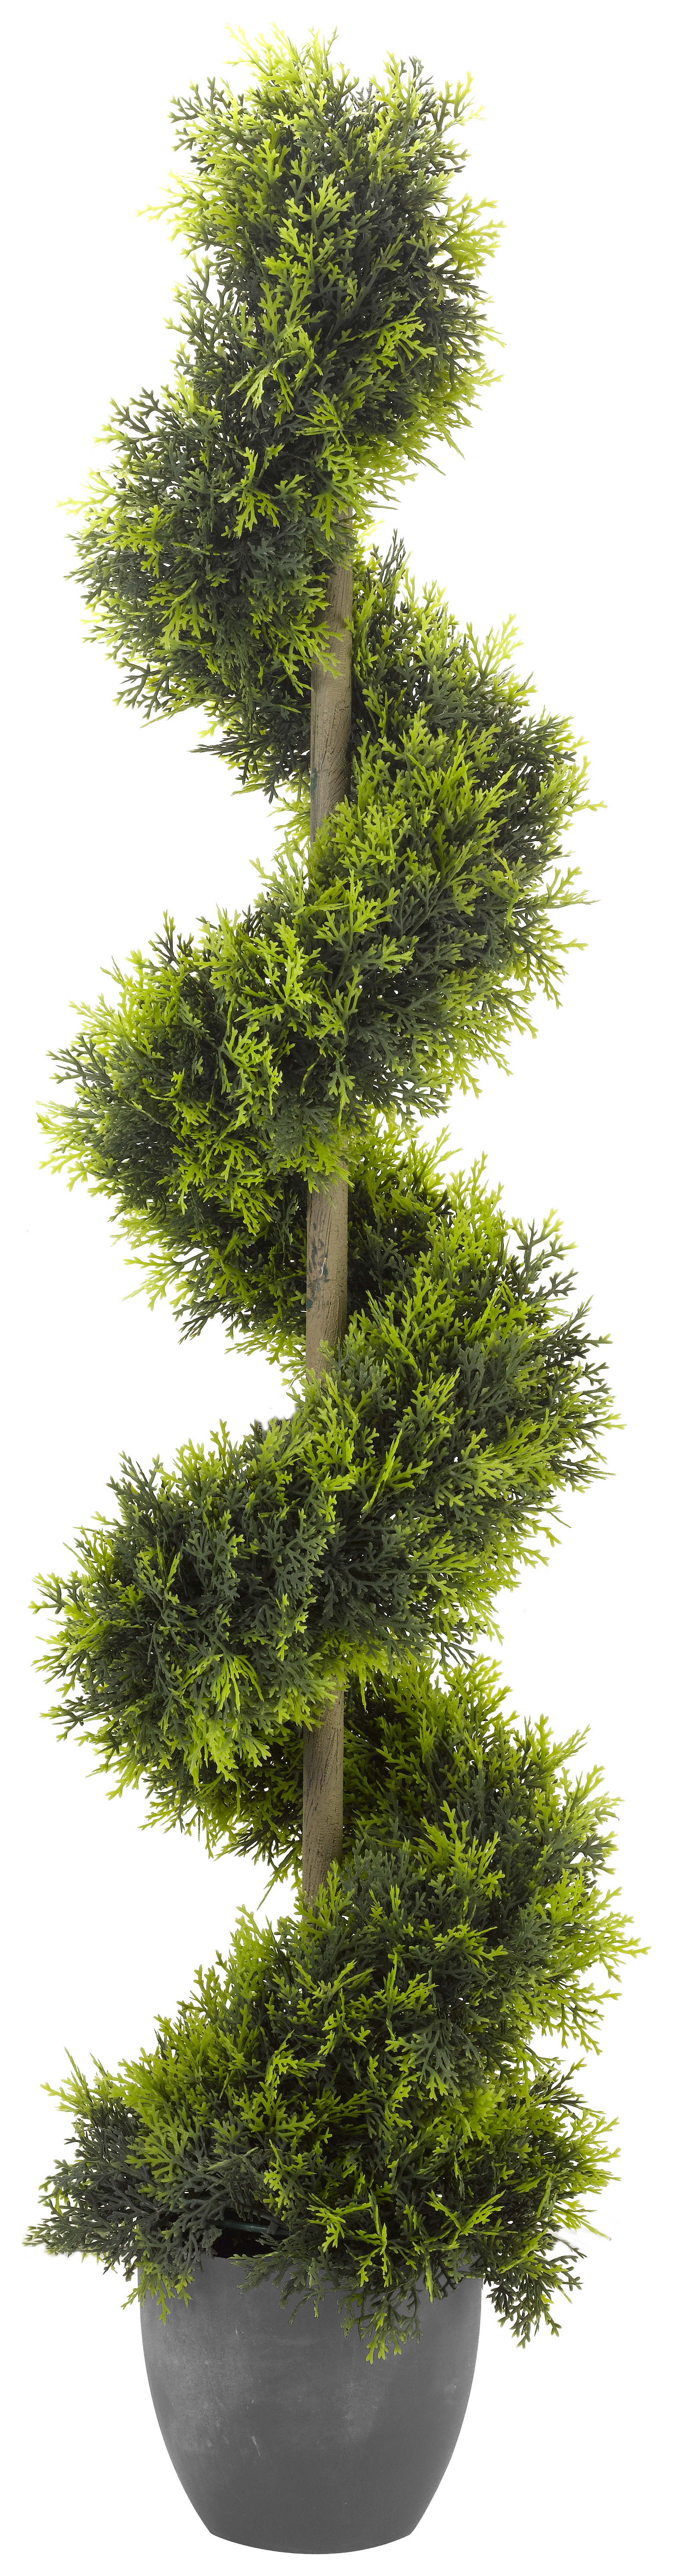 Image of Smart Garden Cypress Topiary Twirl Tree - 120cm